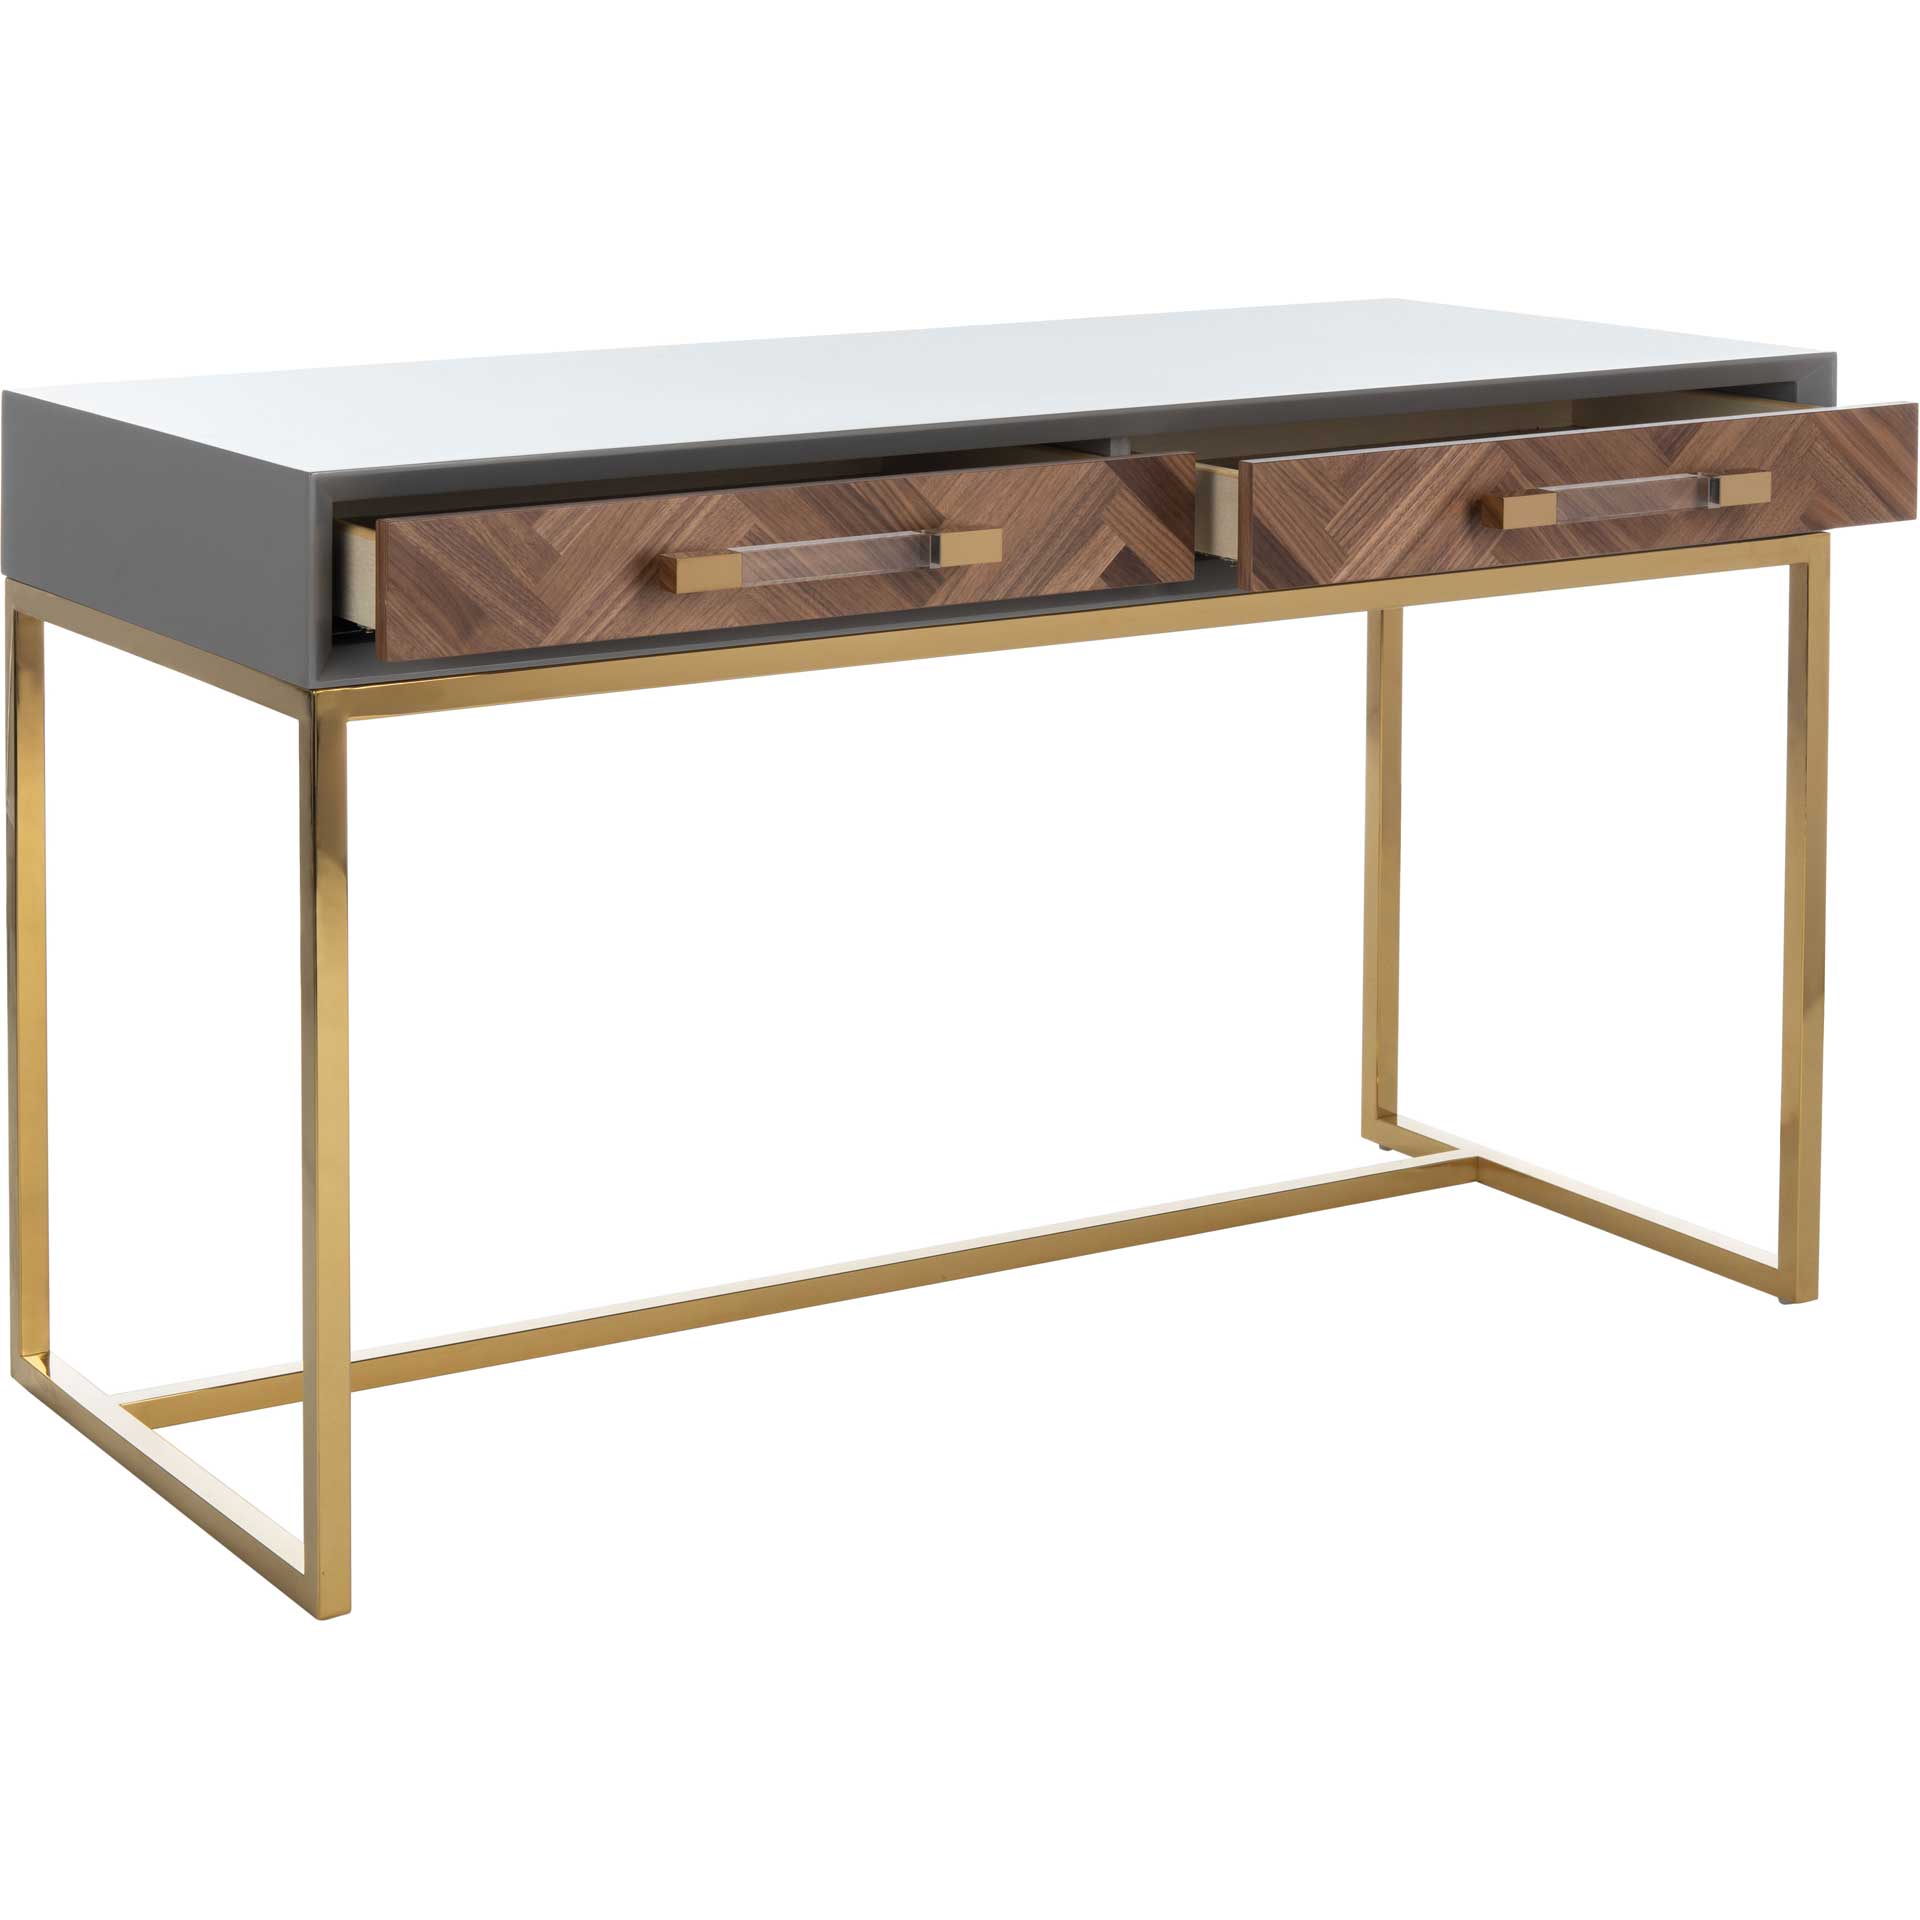 Makayla Modern Desk Gray/Gold